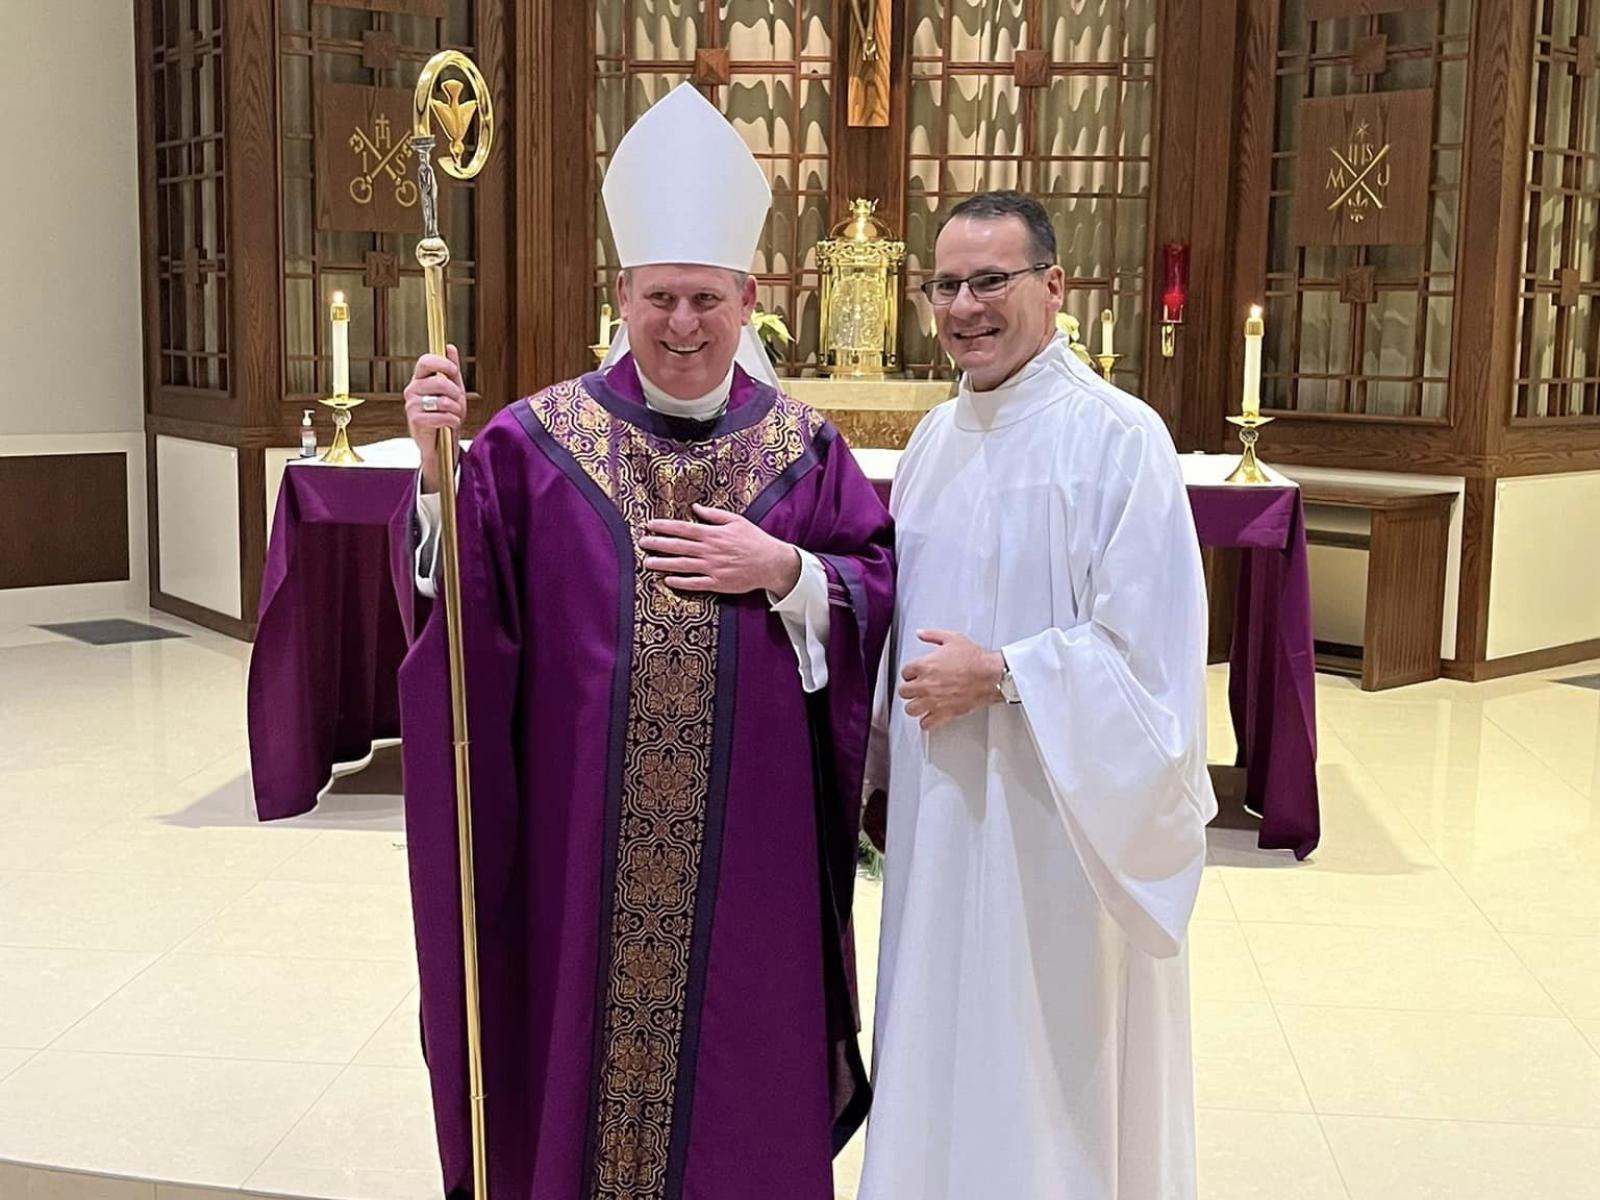 Bishop Sweeney and Paul Landi